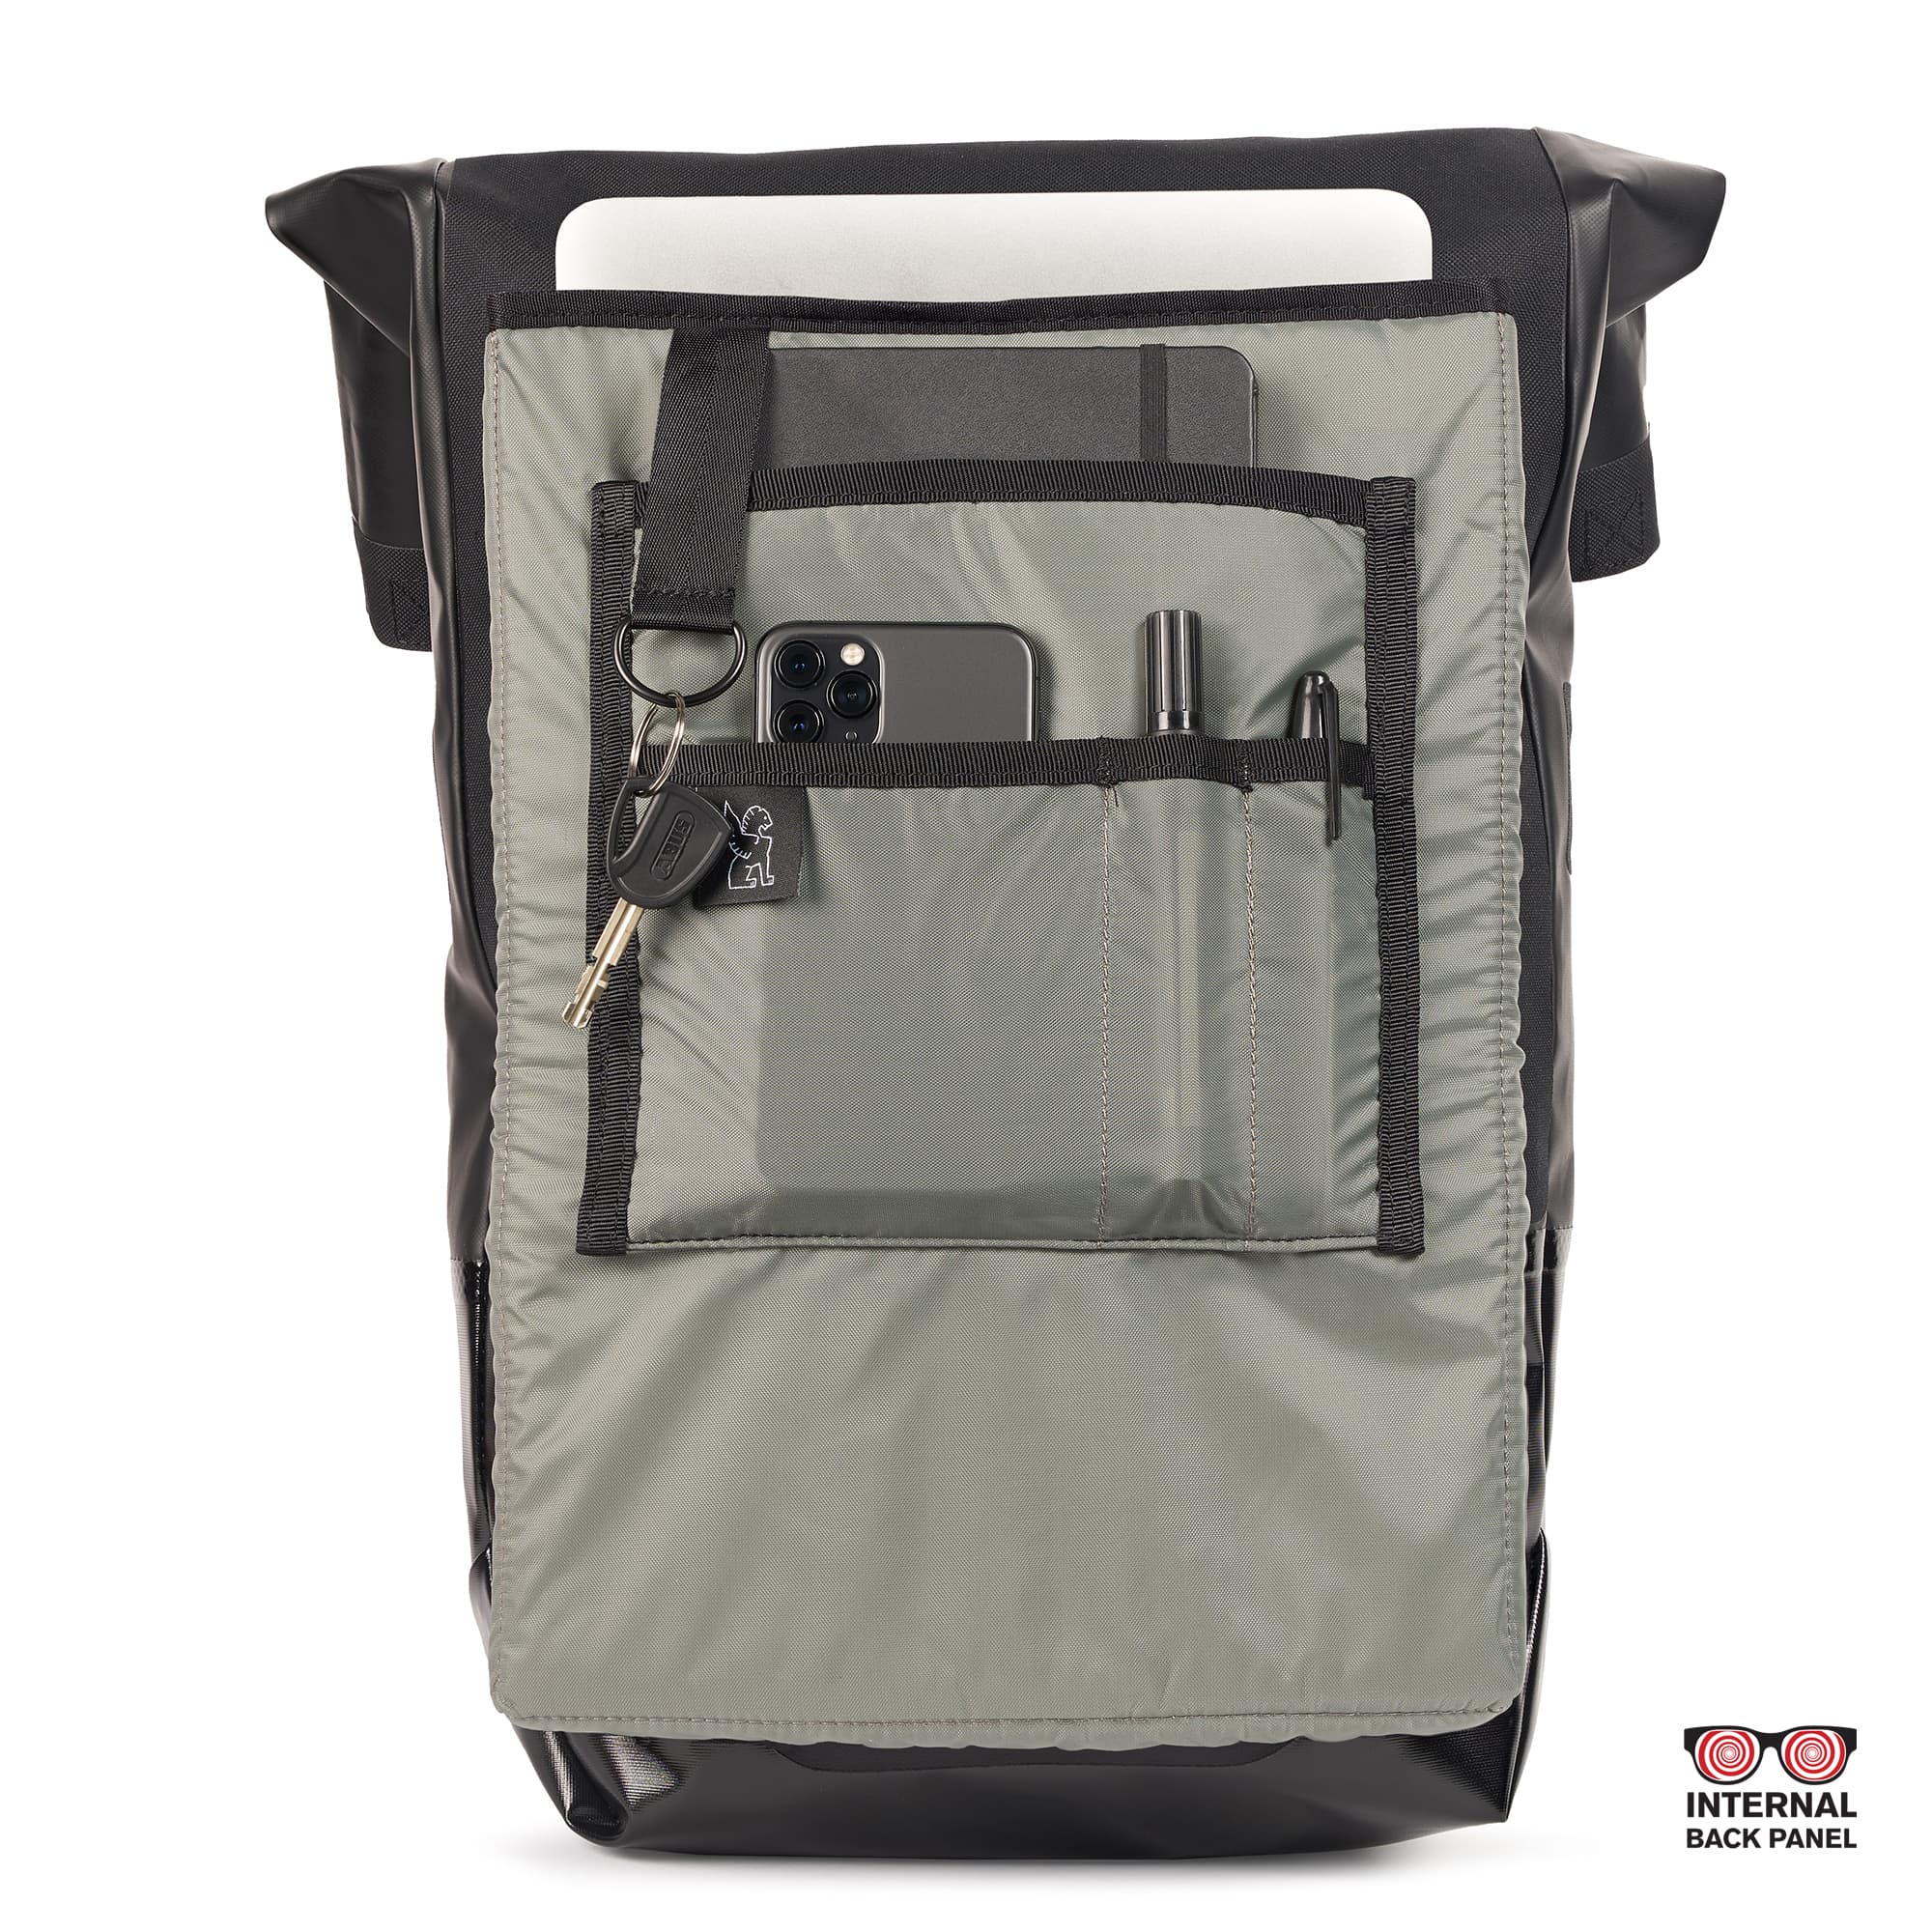 Waterproof 20L backpack in black inside out